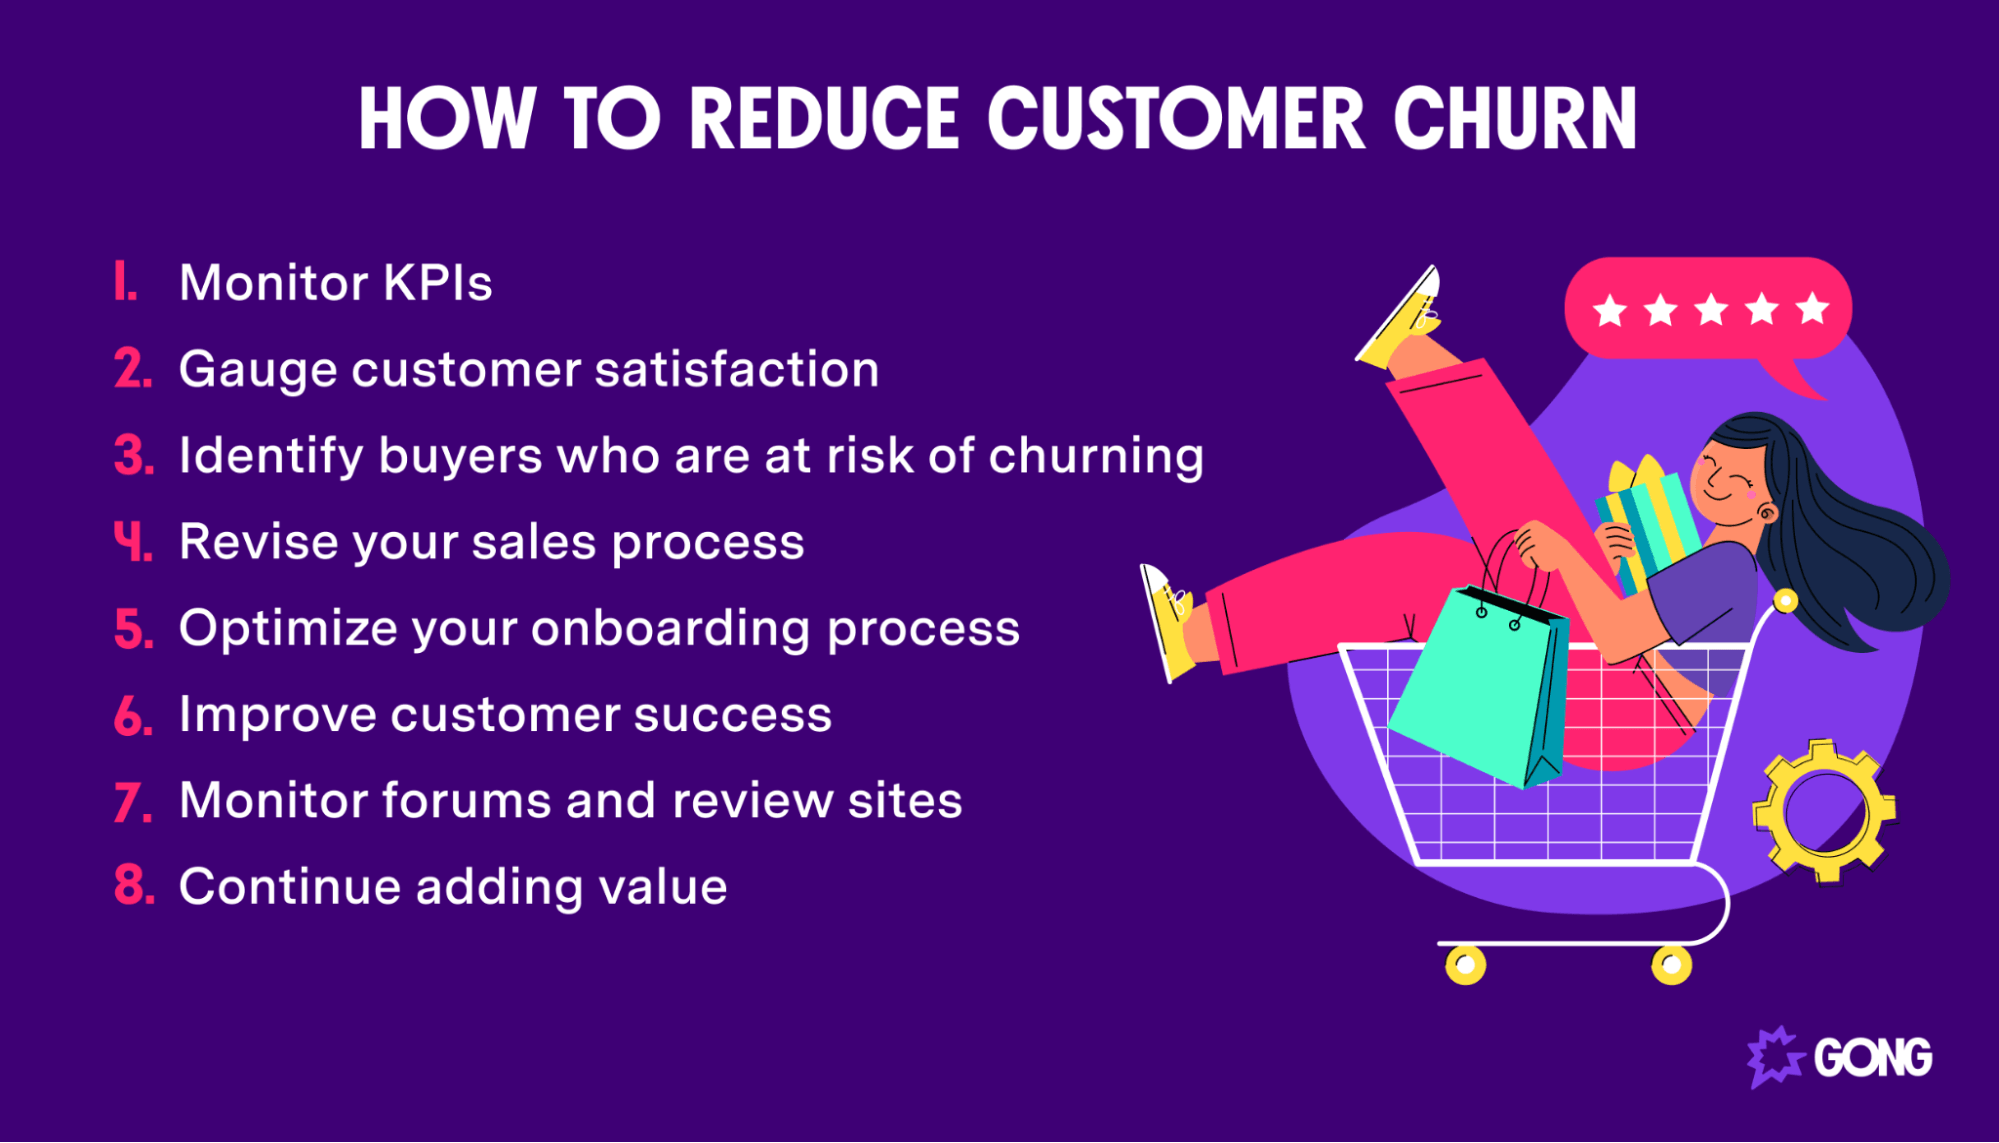 Steps to reduce customer churn